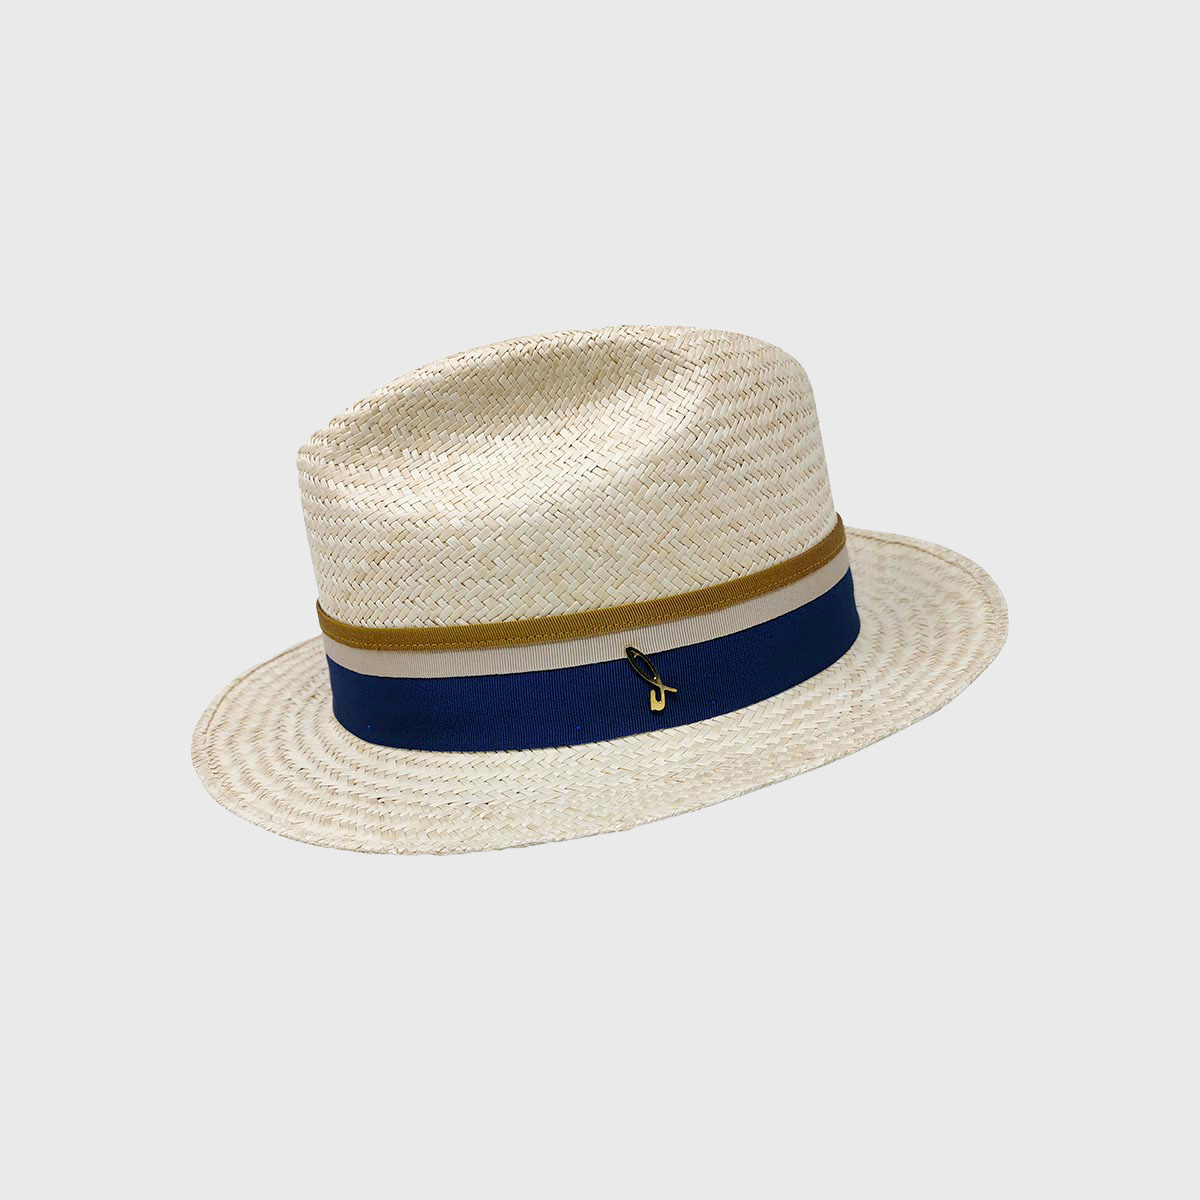 Fedora Hat in Eastern Panama Straw